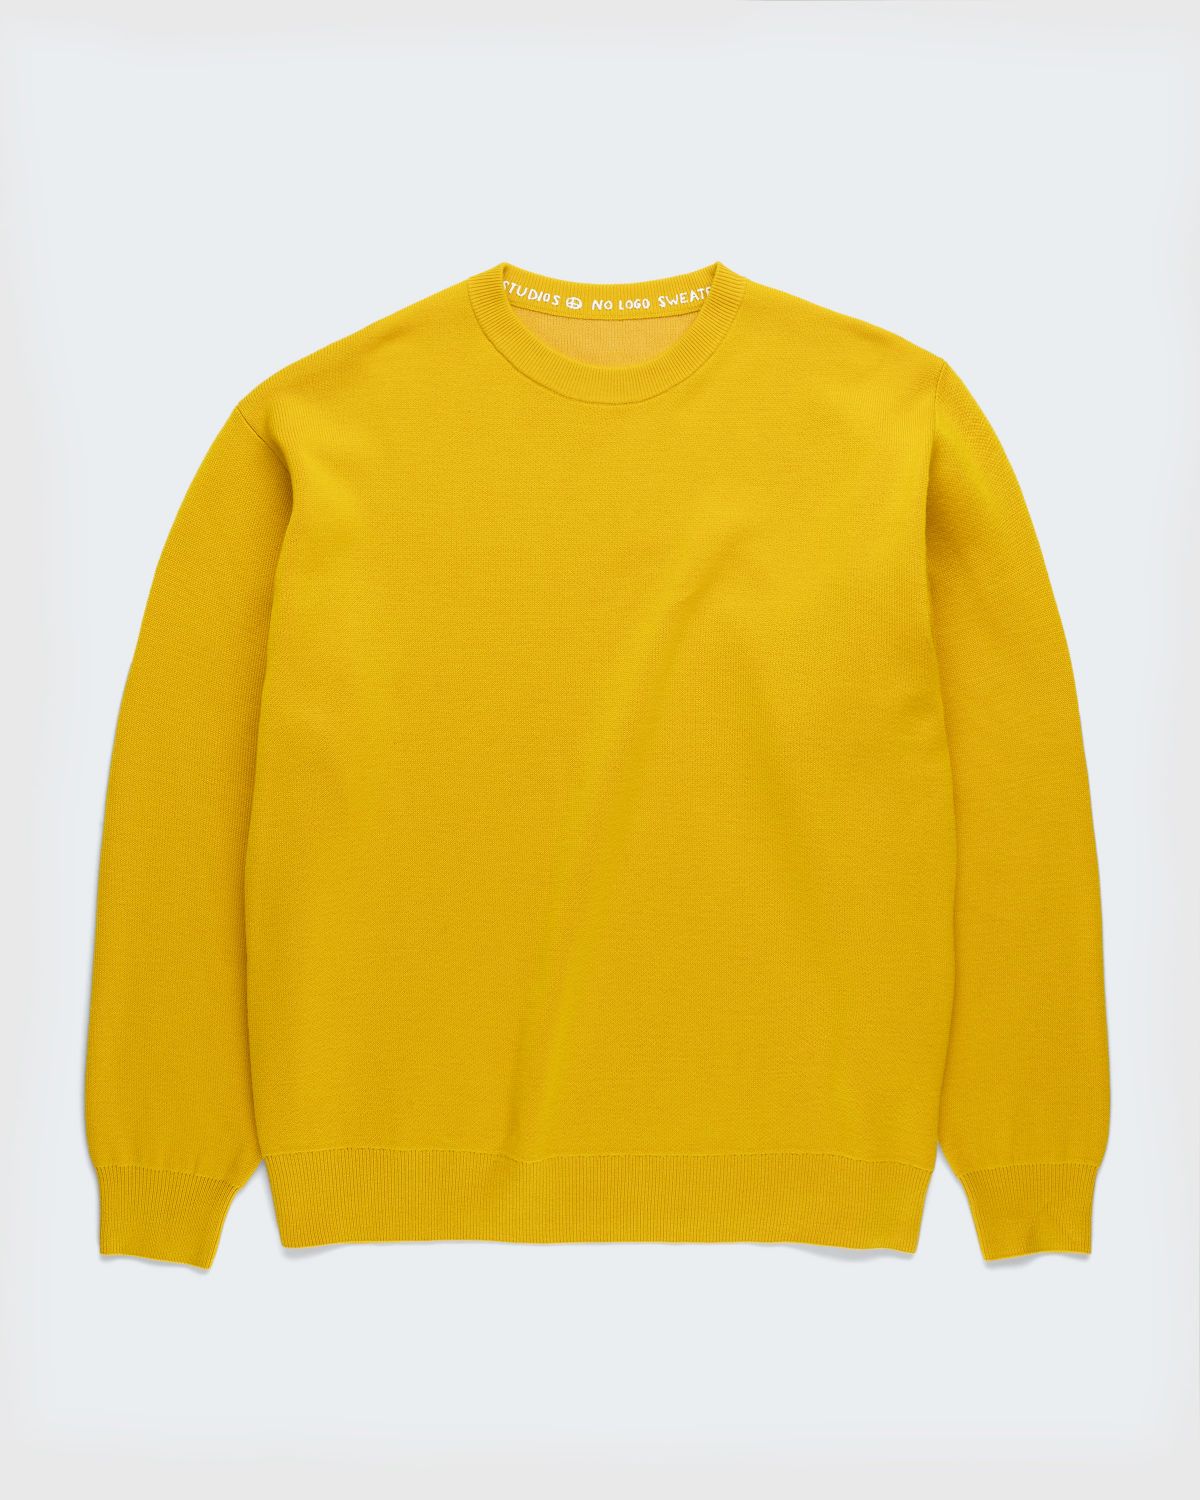 Acne Studios – Merino Wool Crewneck Sweater Yellow - Knitwear - Yellow - Image 1